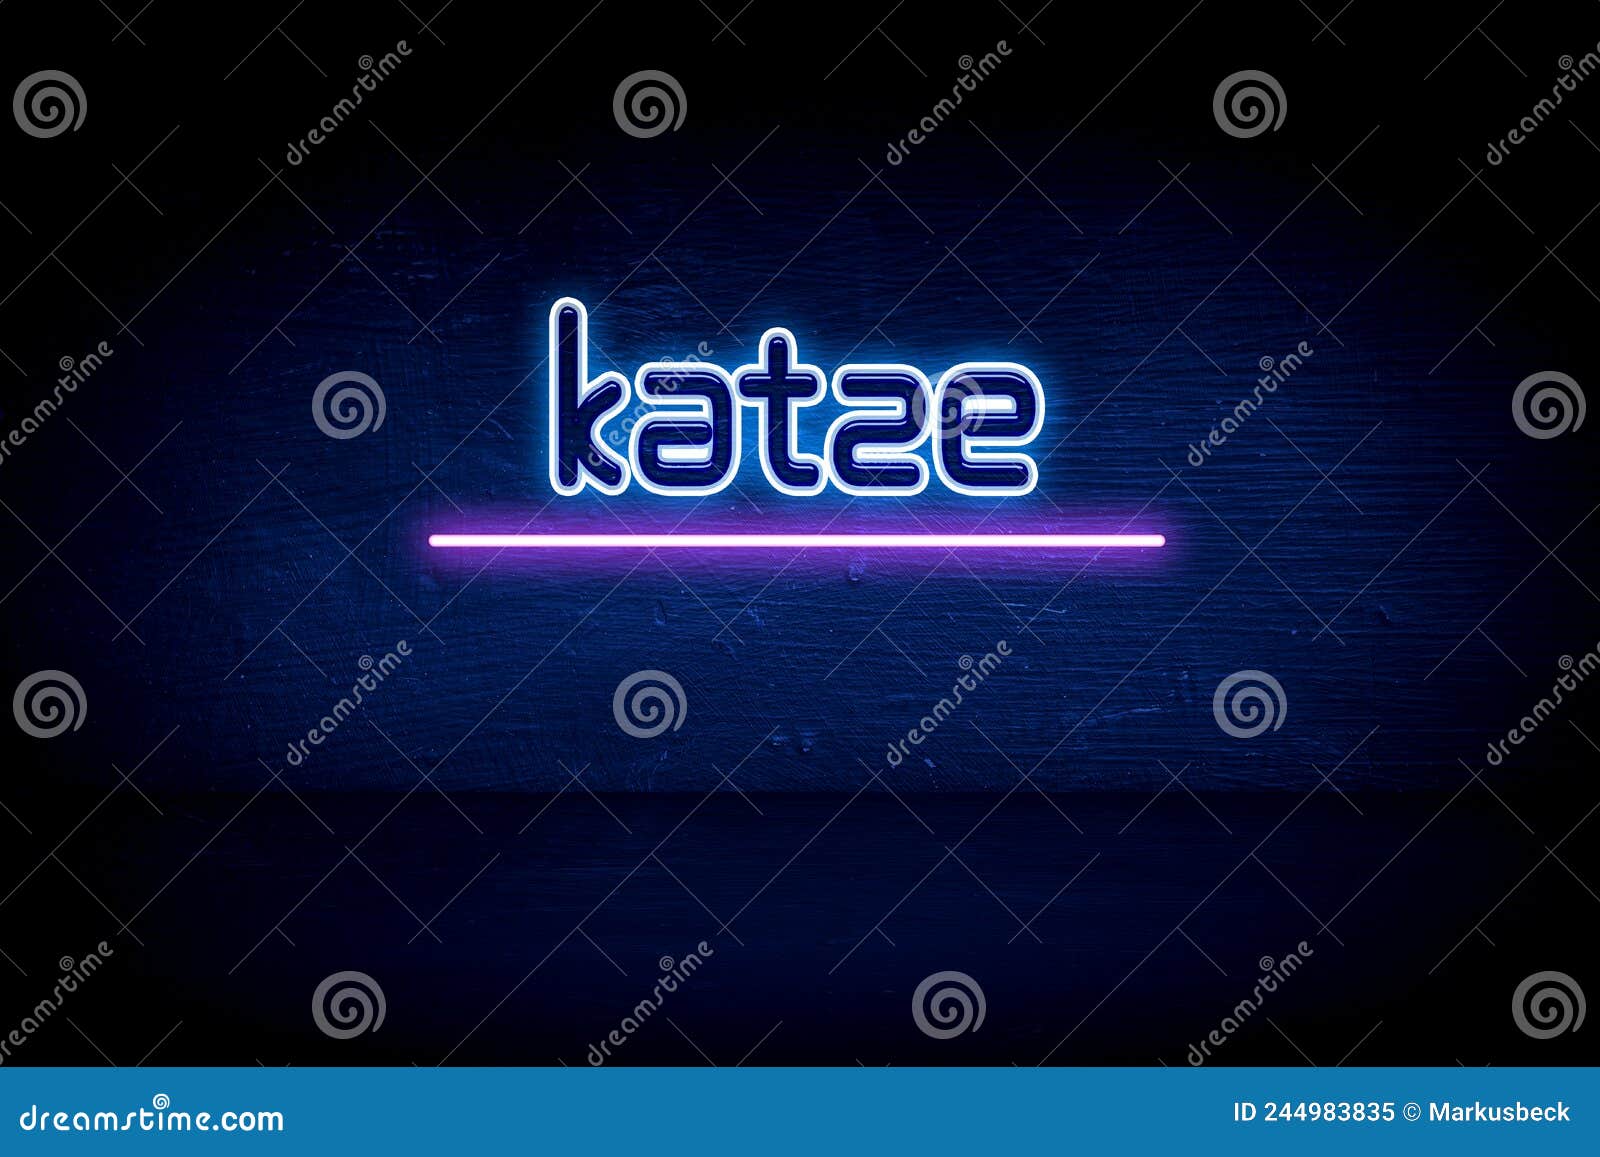 katze - blue neon announcement signboard